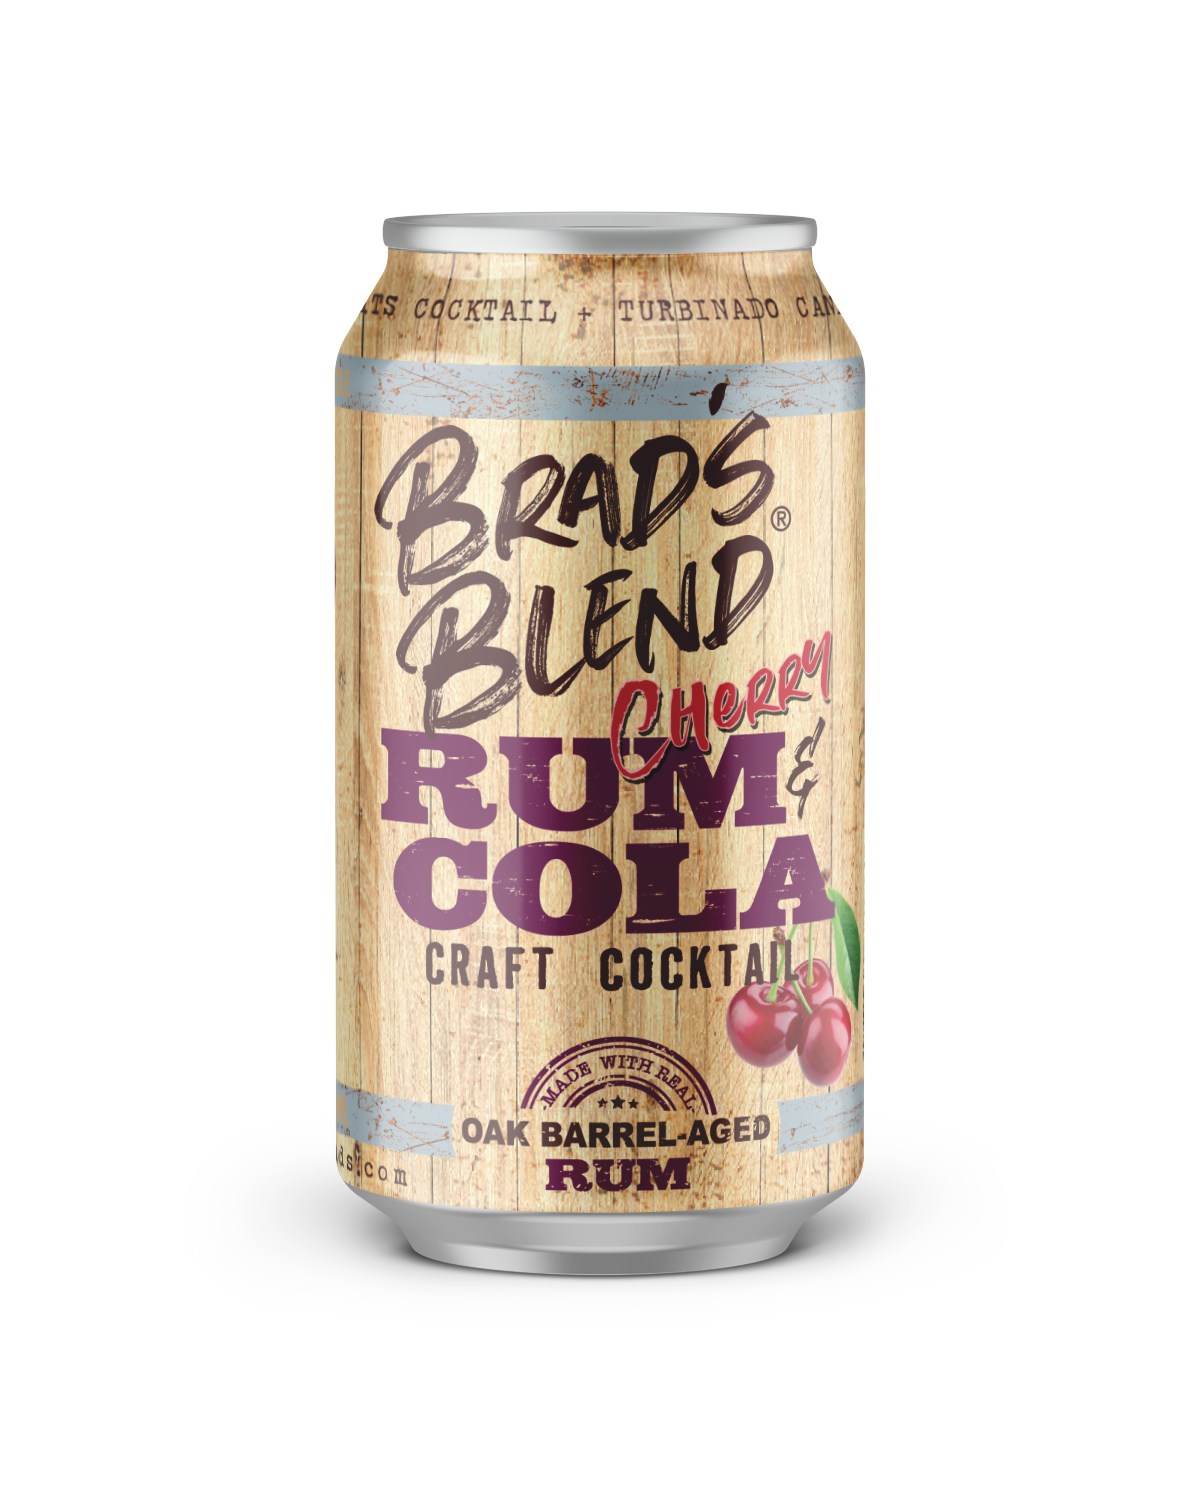 Brad's Cherry Blend of Rum & Cola